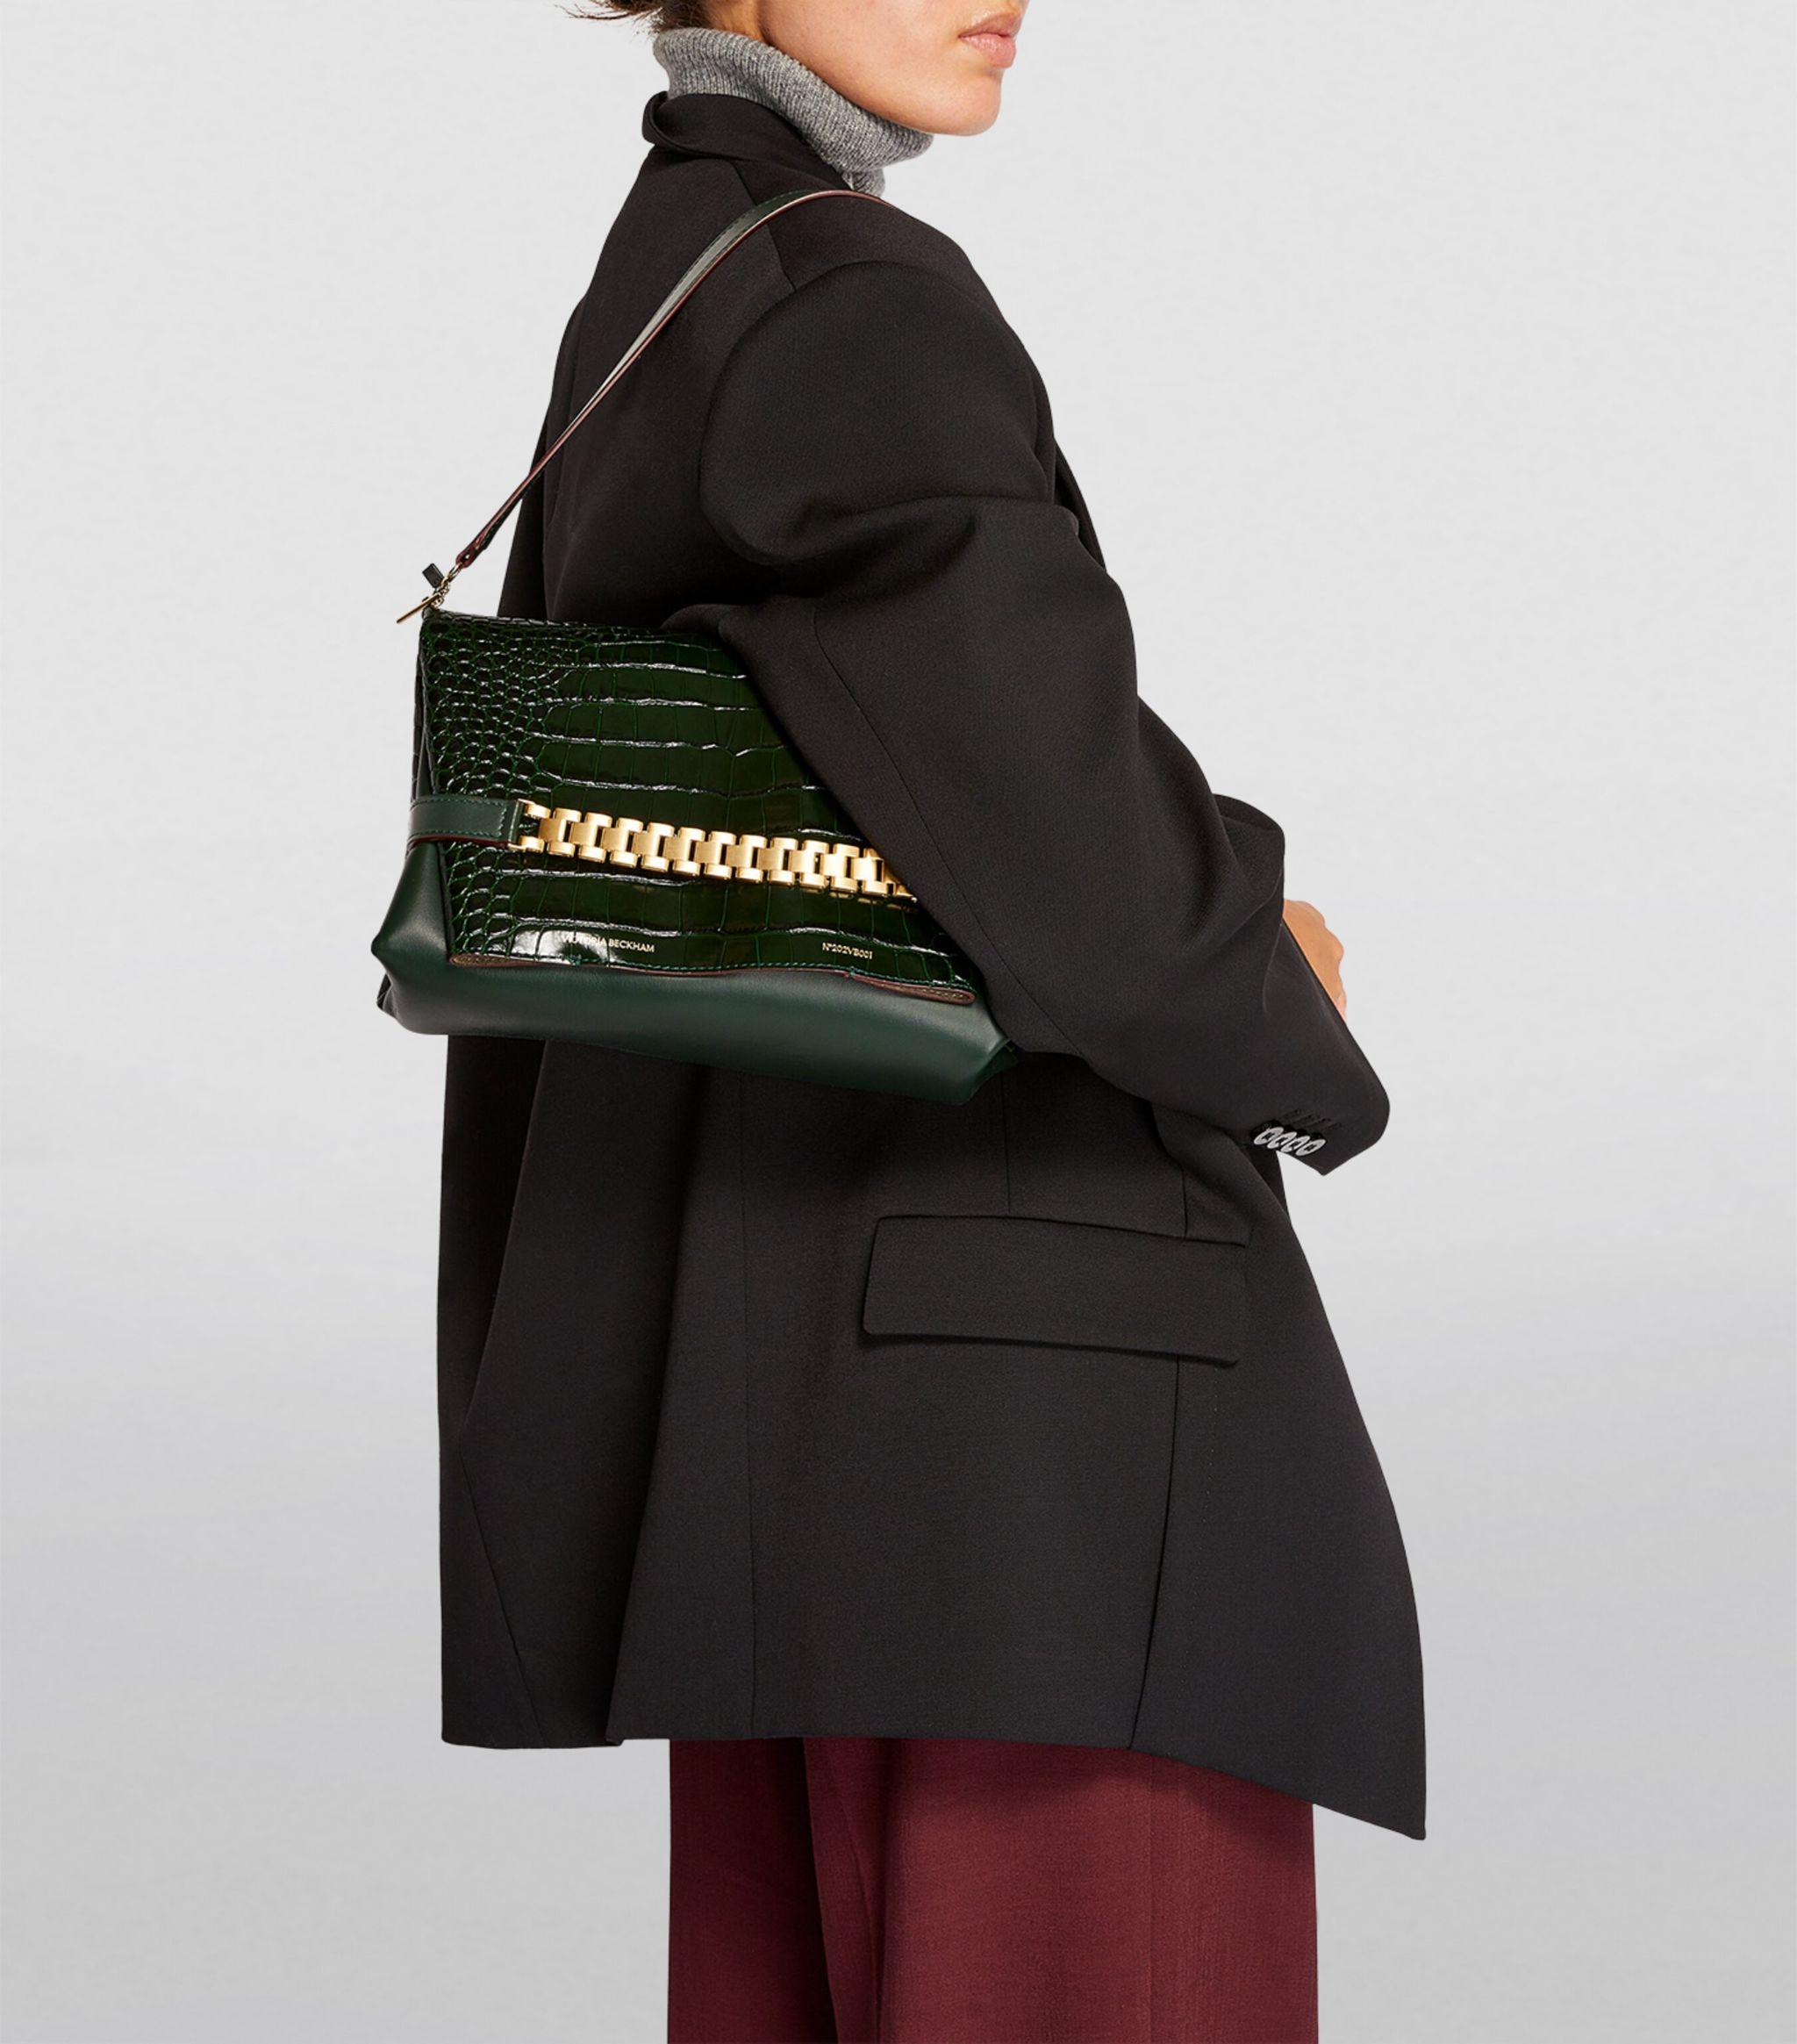 Victoria Beckham Chain-Detail Shoulder Bag